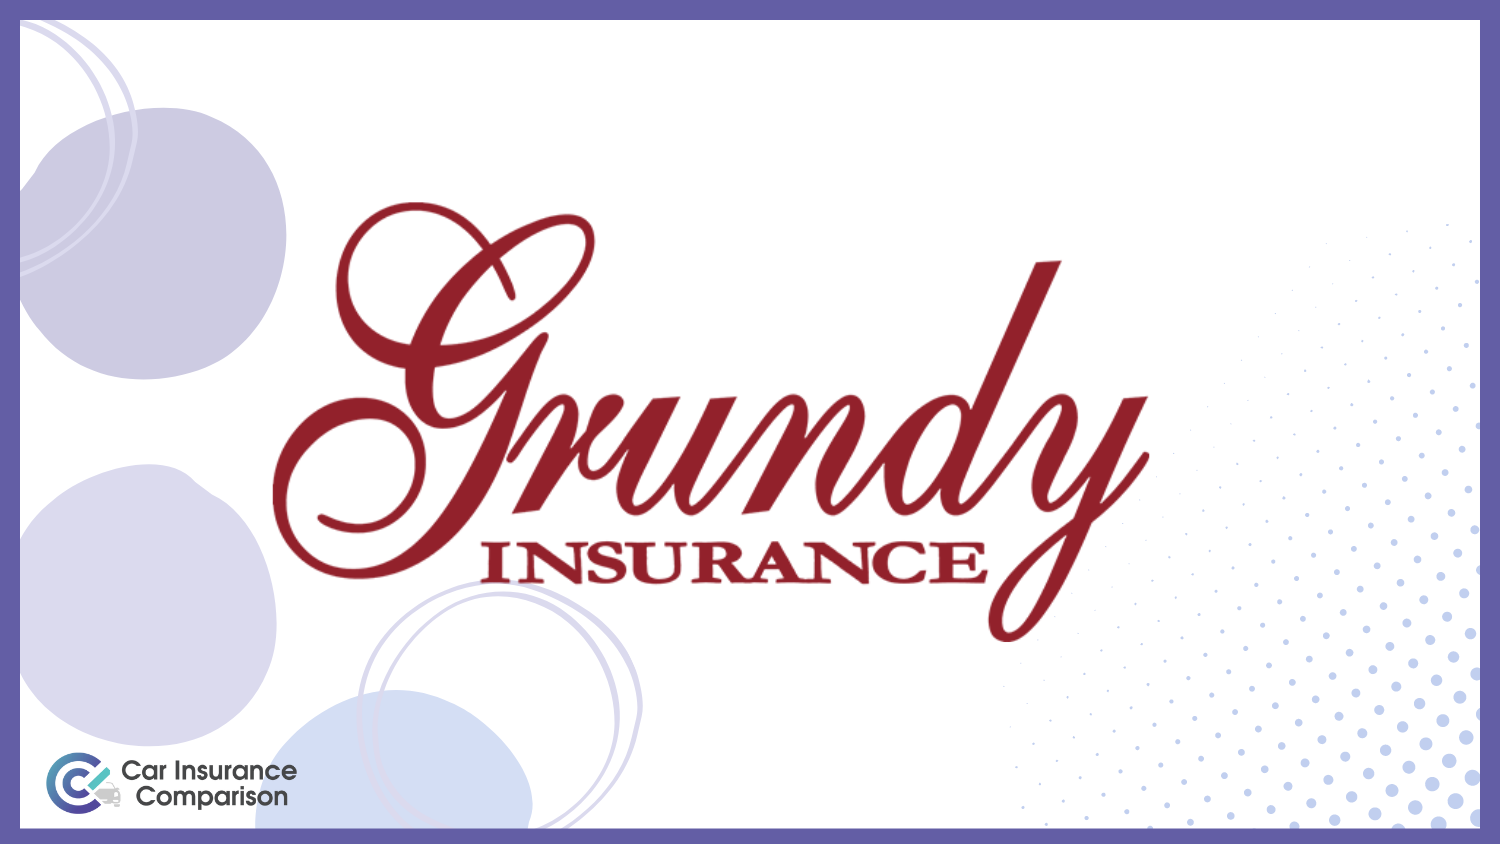 Car-Insurance-Comparison-Grundy-Provider-Header-Banner